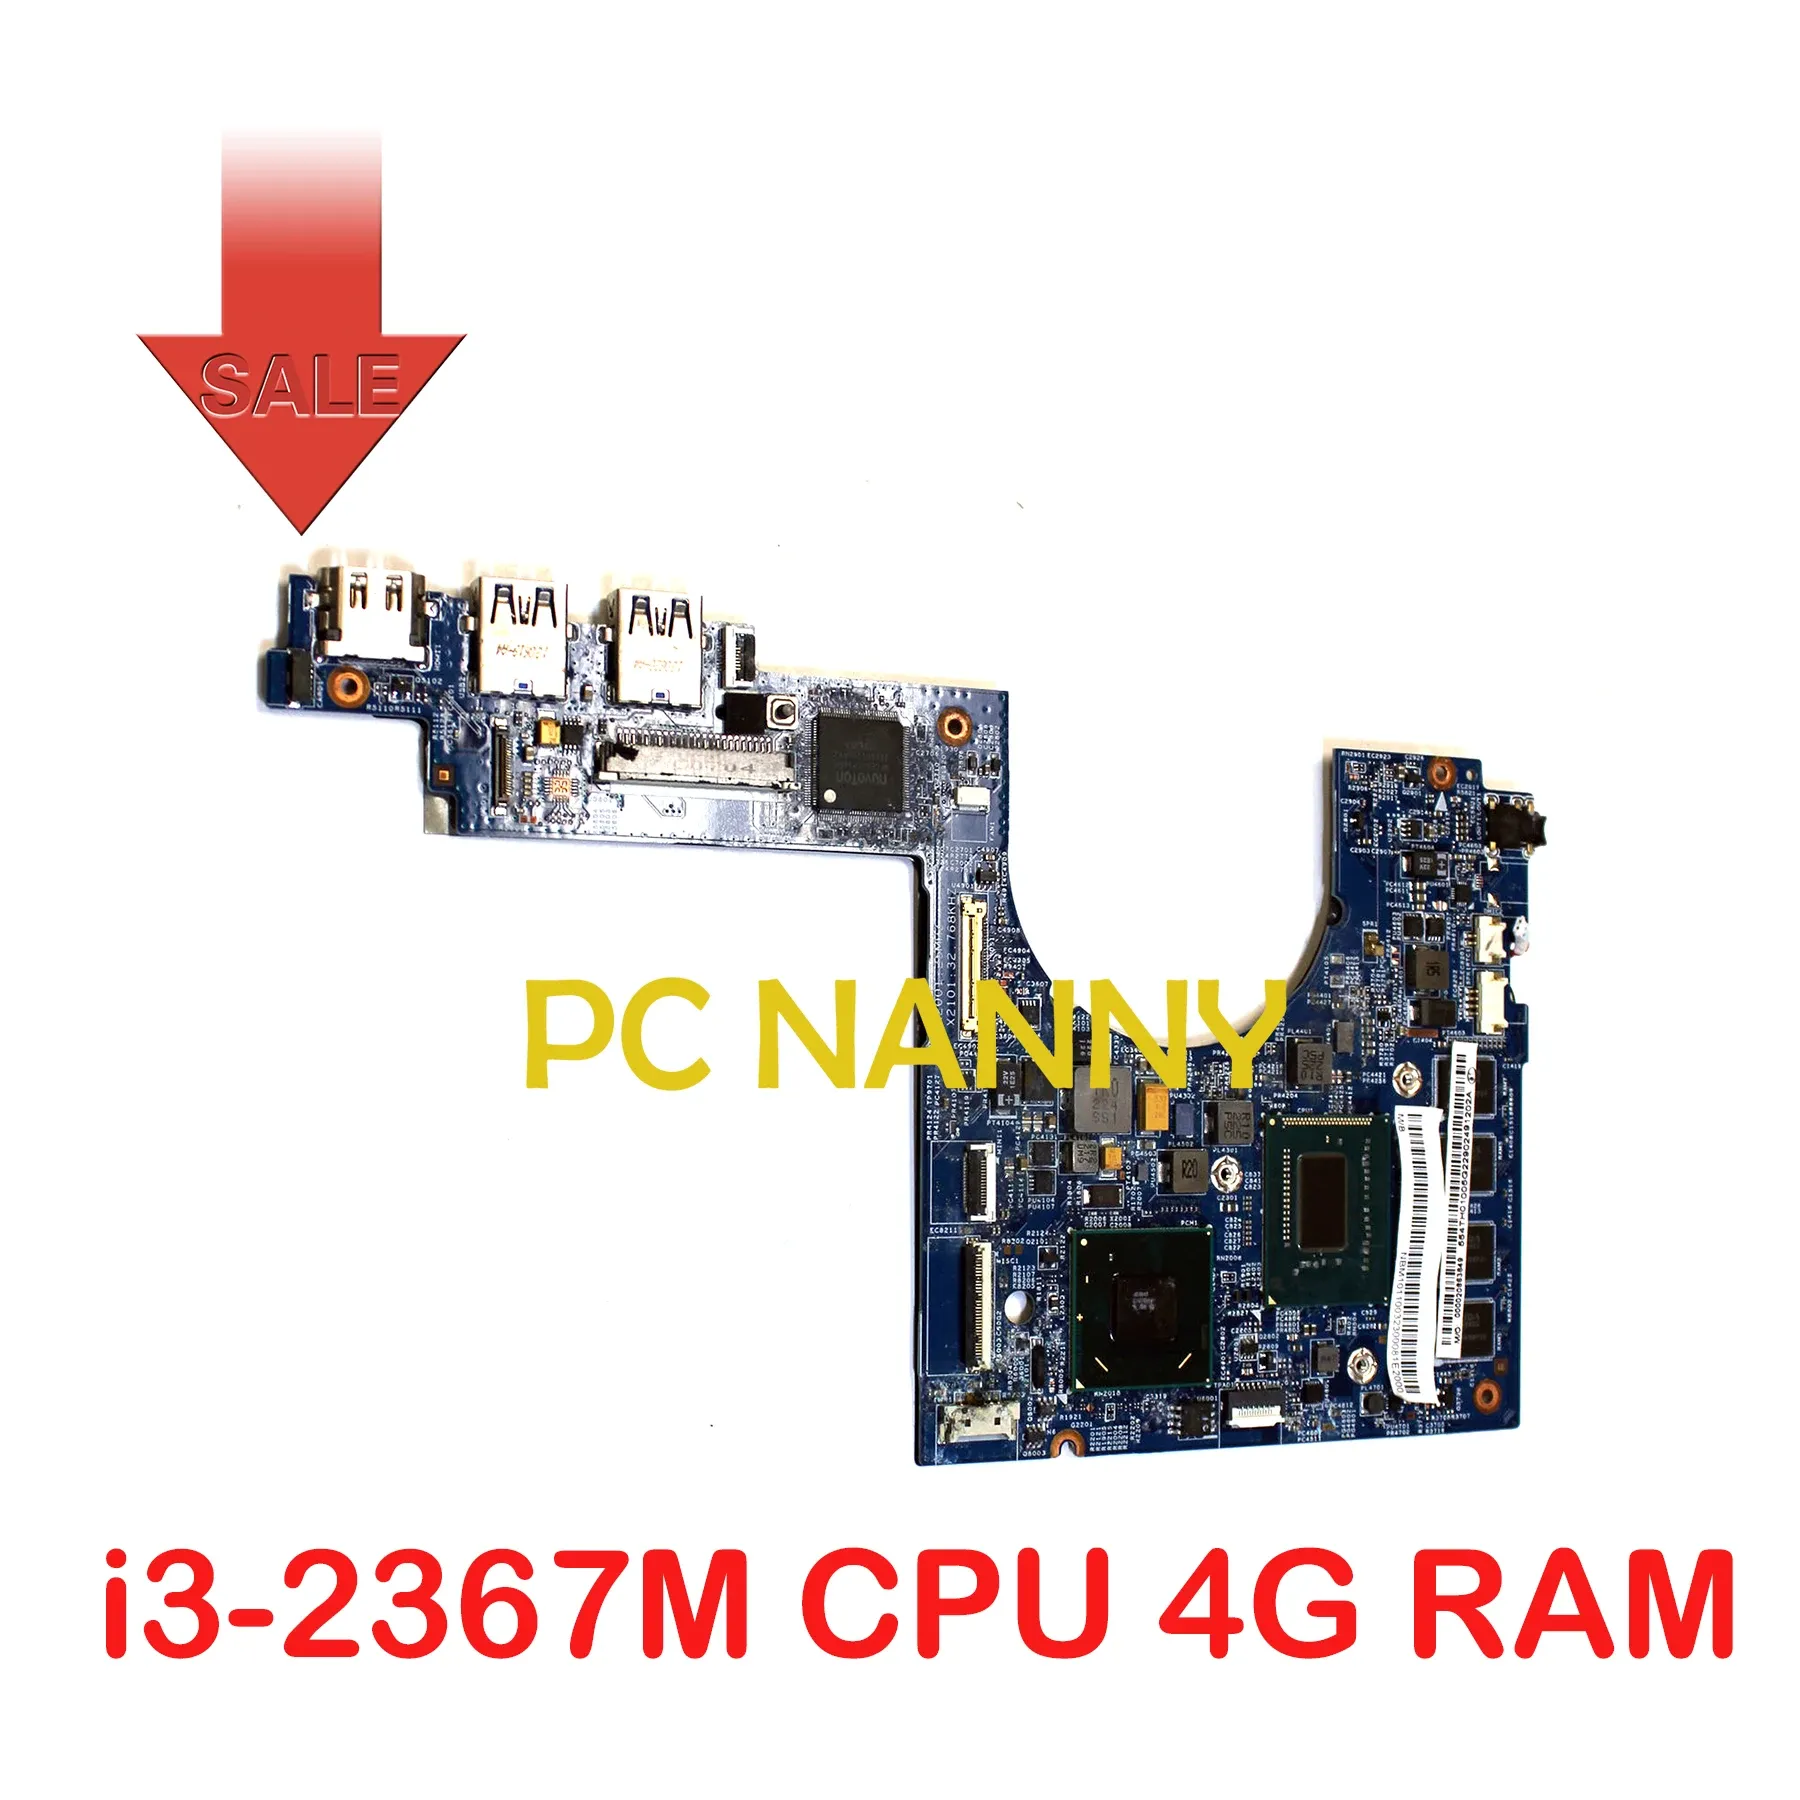 PCNANNY PCNANNY PARA ACER MS2346 S3391 LAPTOP MOTERBOLA I32367M I32377M 48.4TH03.021 NBM1011001 4G RAM